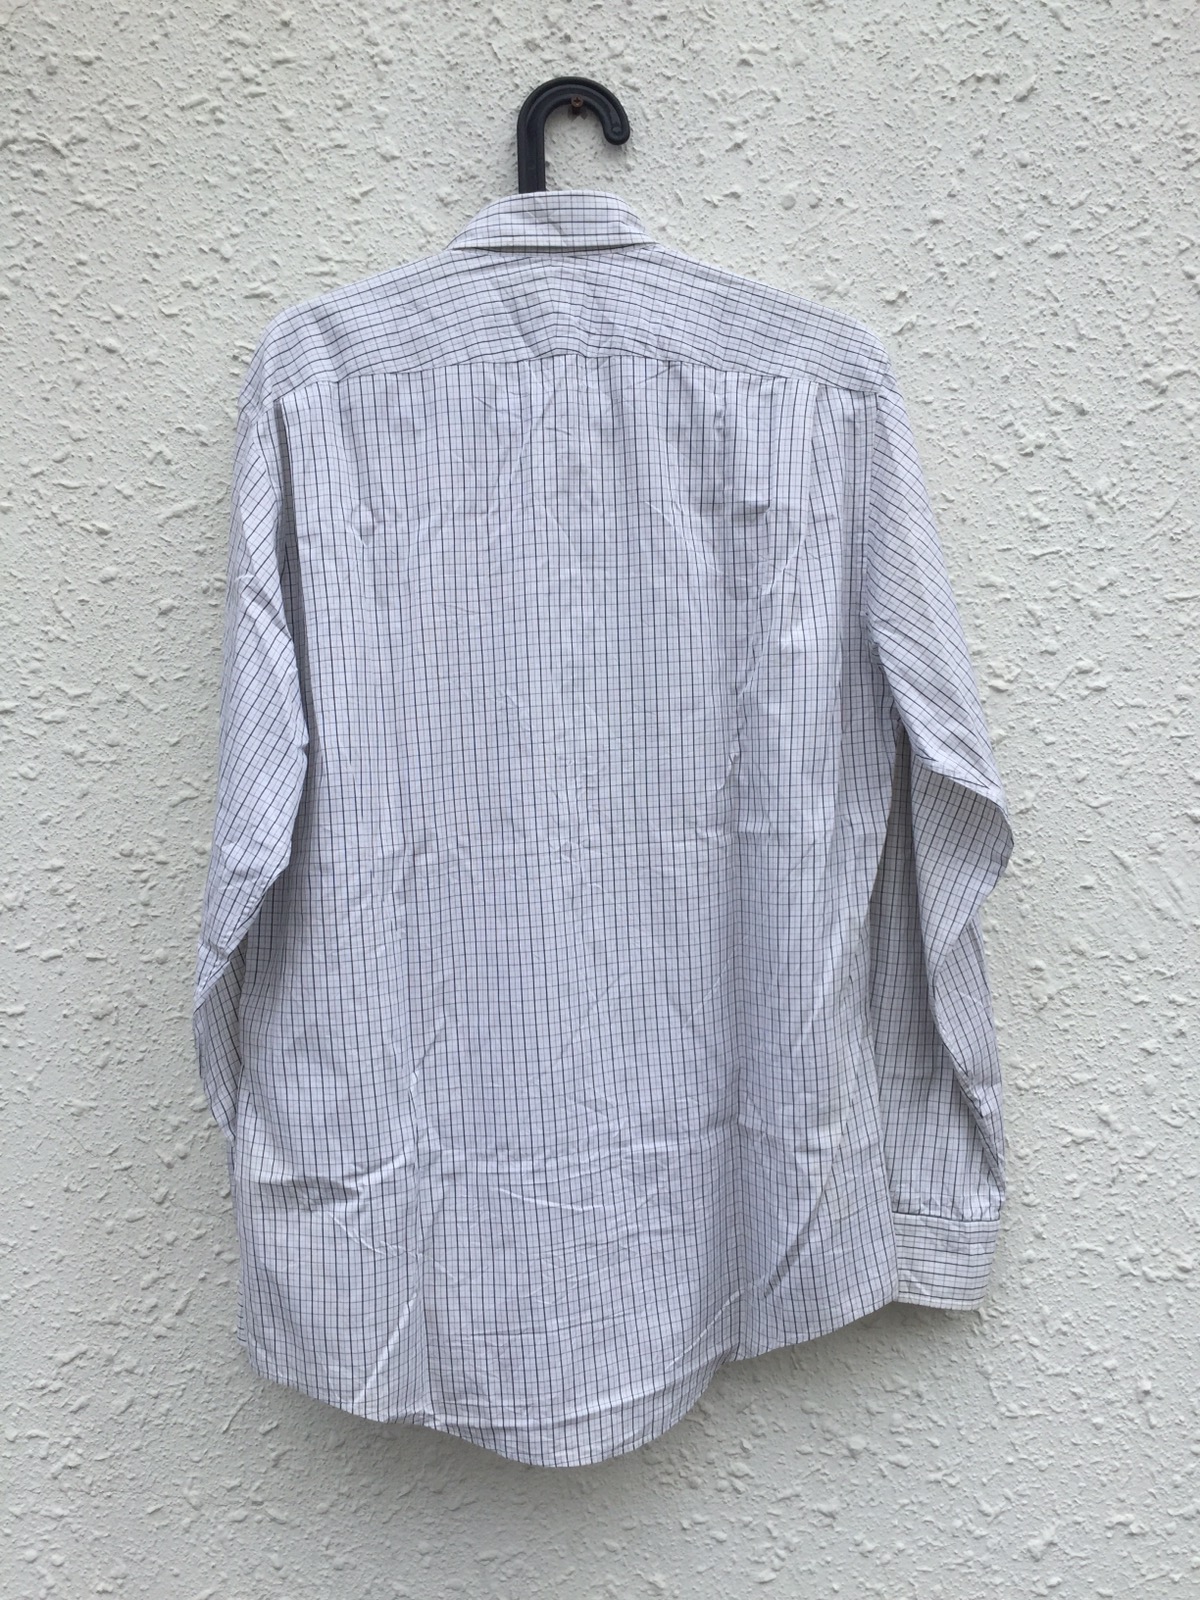 Vintage Hermes Basic Checkered Long Sleeve Shirt - 8